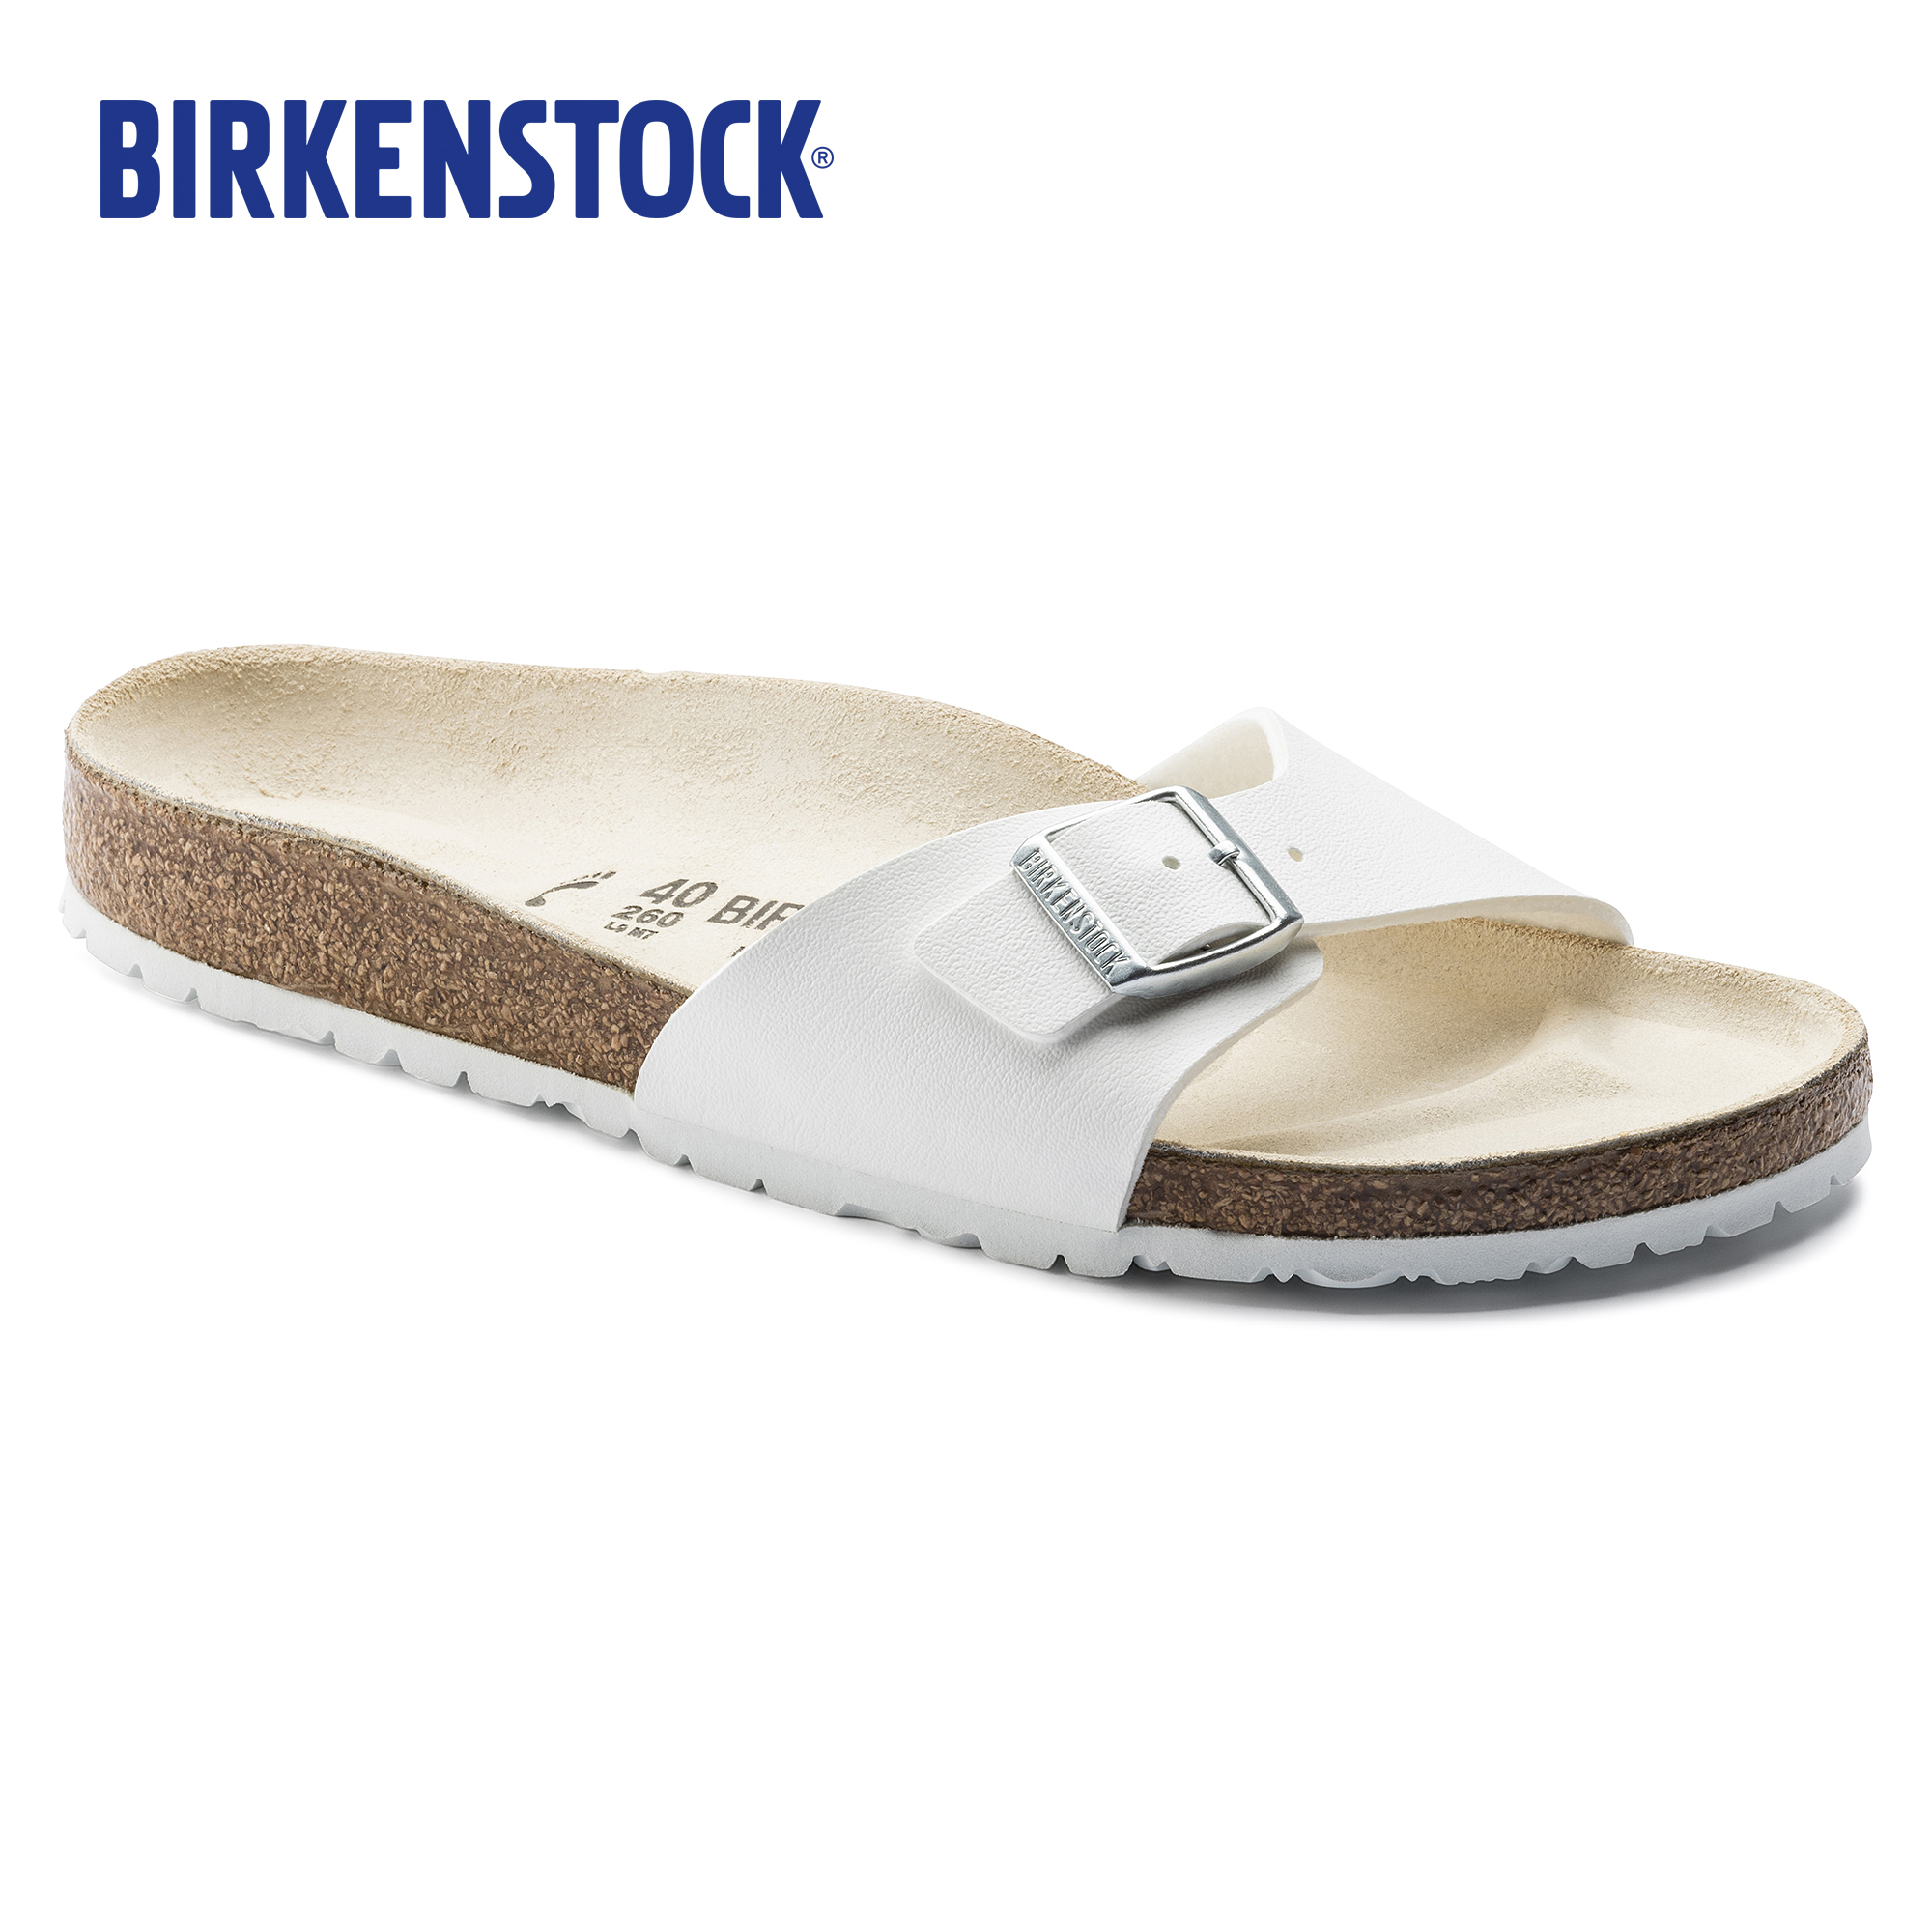 white birkenstocks sale cheap - Fast 